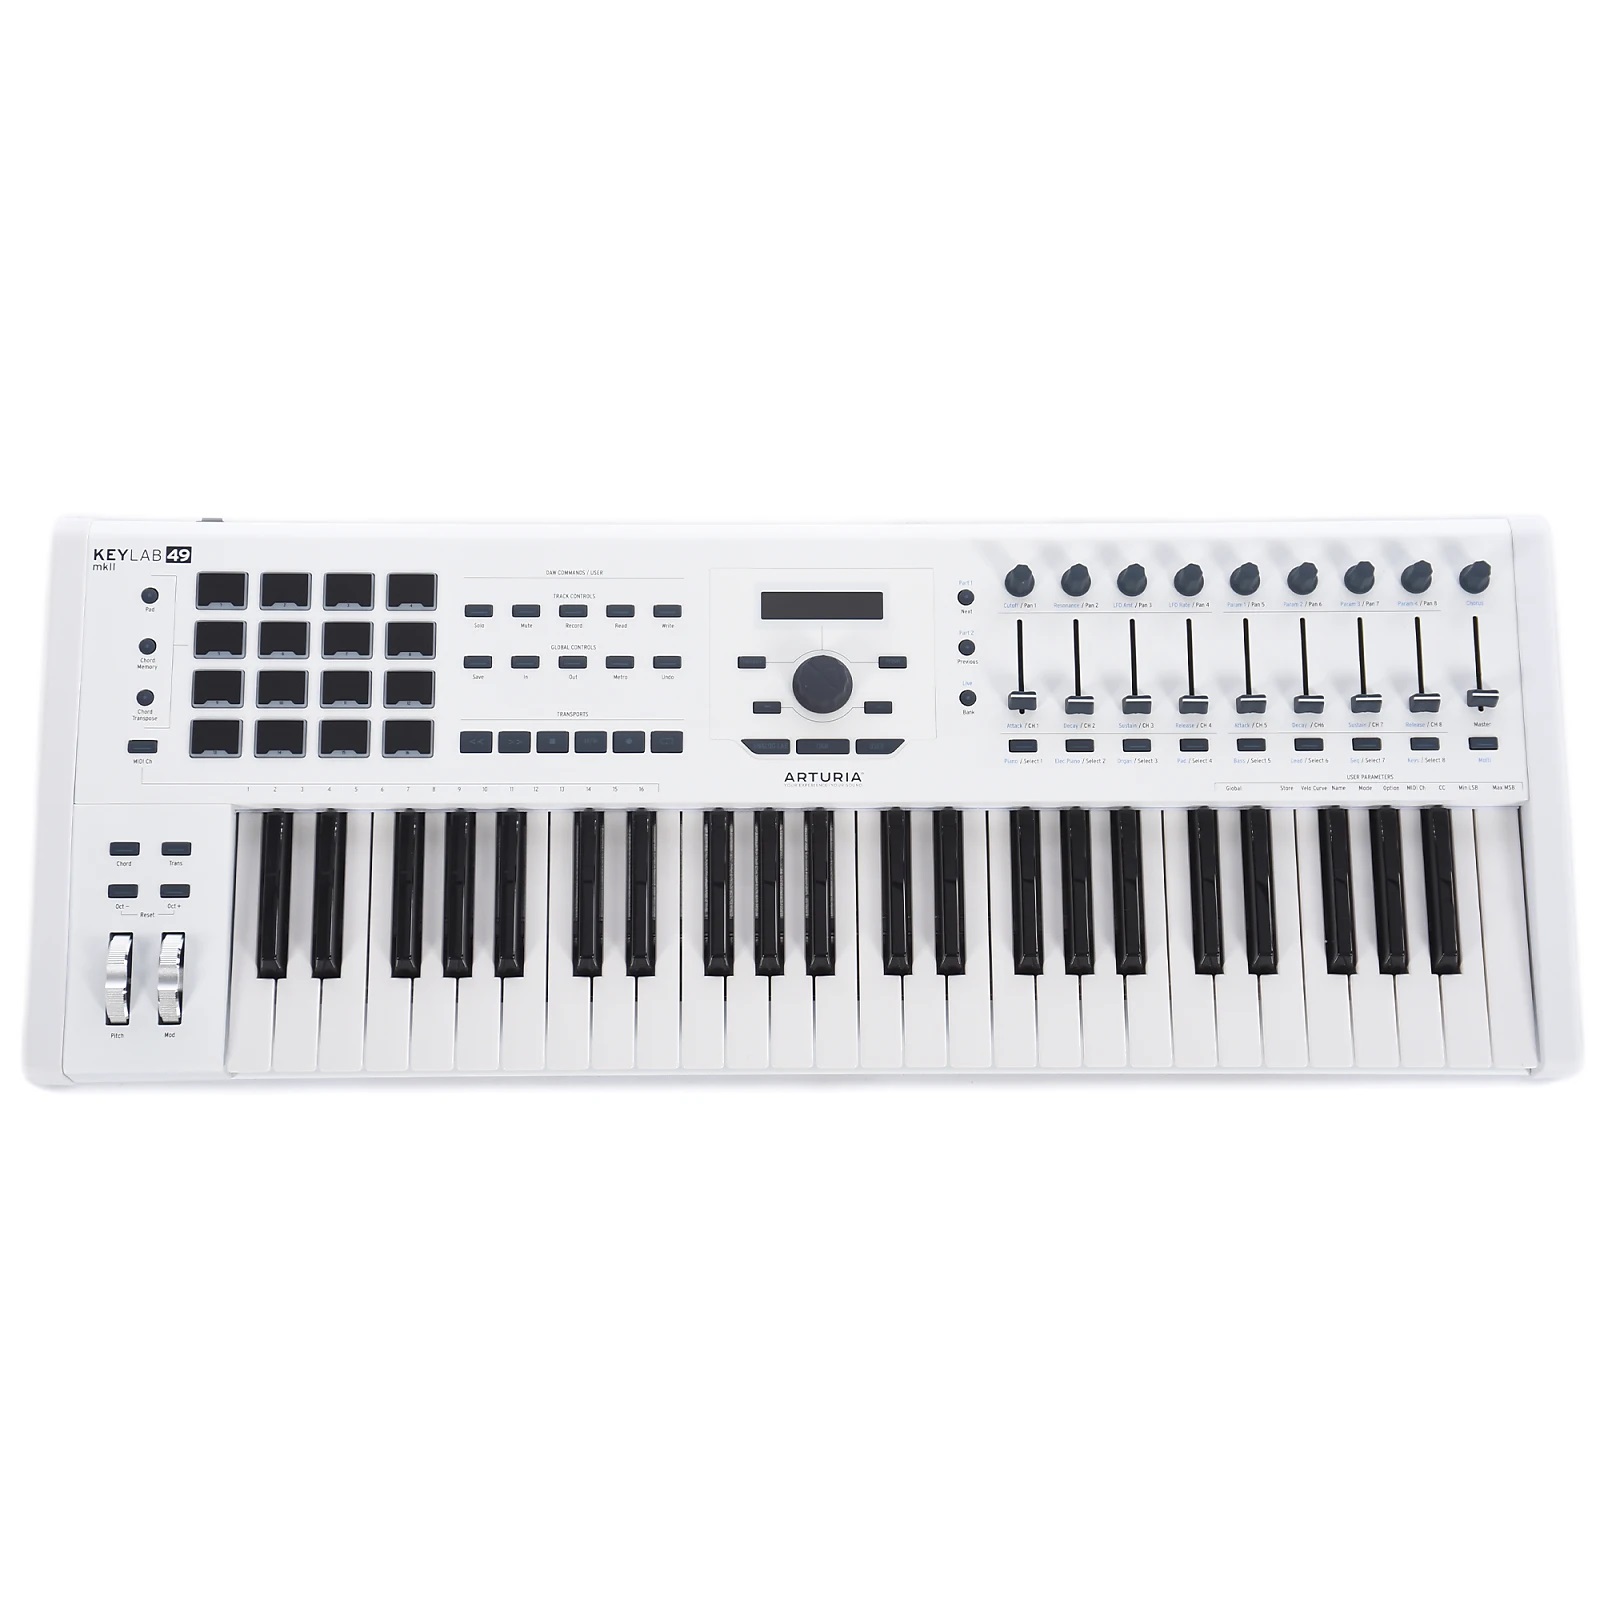 MIDI клавиатуры Arturia KeyLab mkII 49 White контроллер ard classic live 1 5m white 230v 1 6a ardecoled закрытый